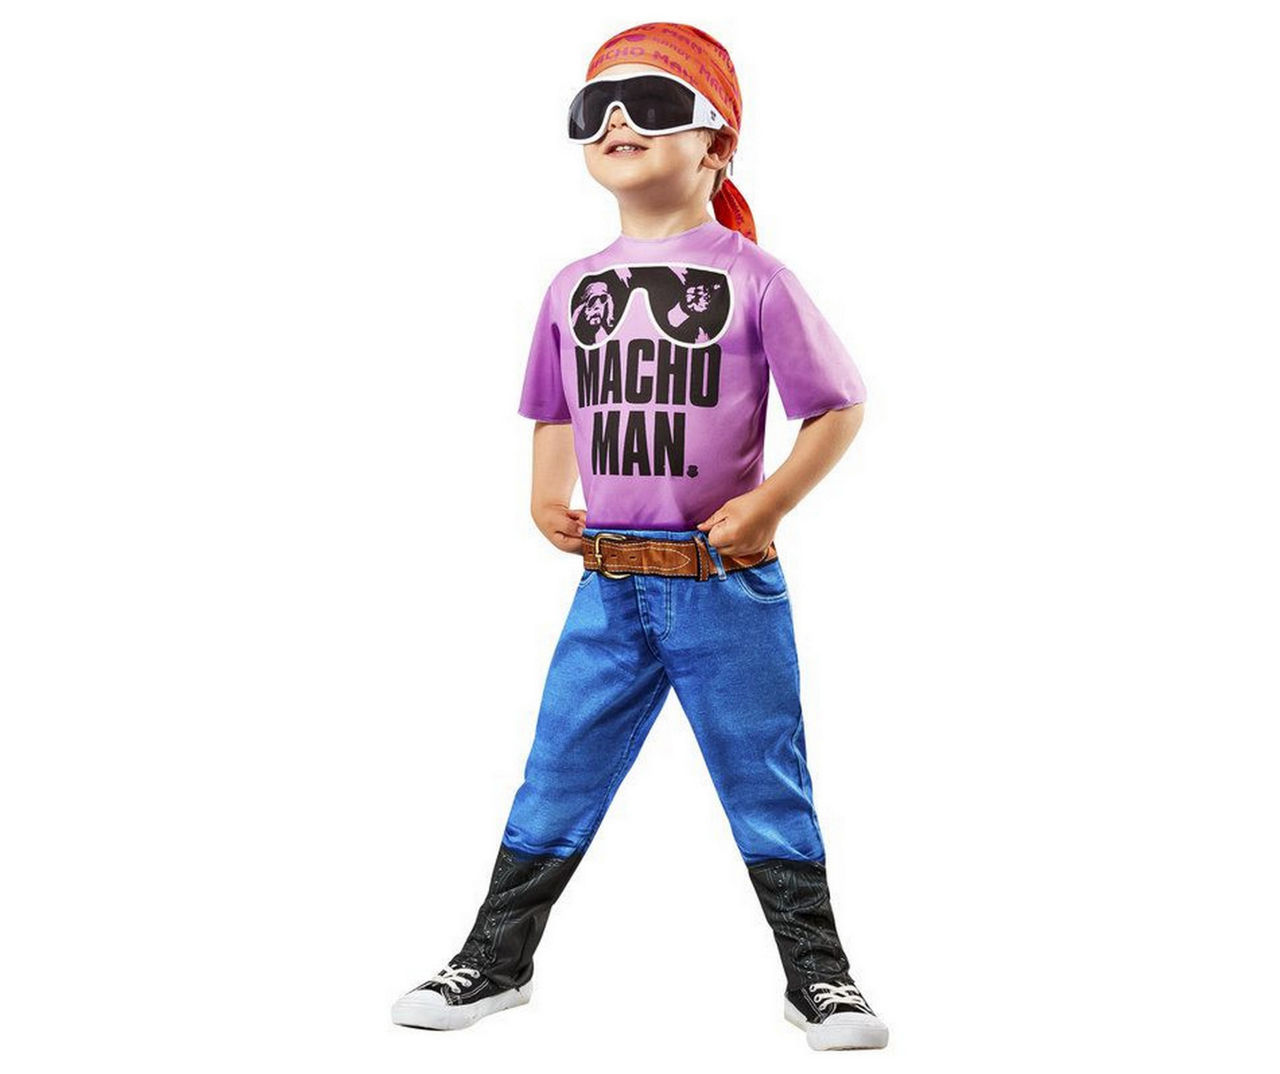 Toddler Size 4T WWE Randy Savage Costume